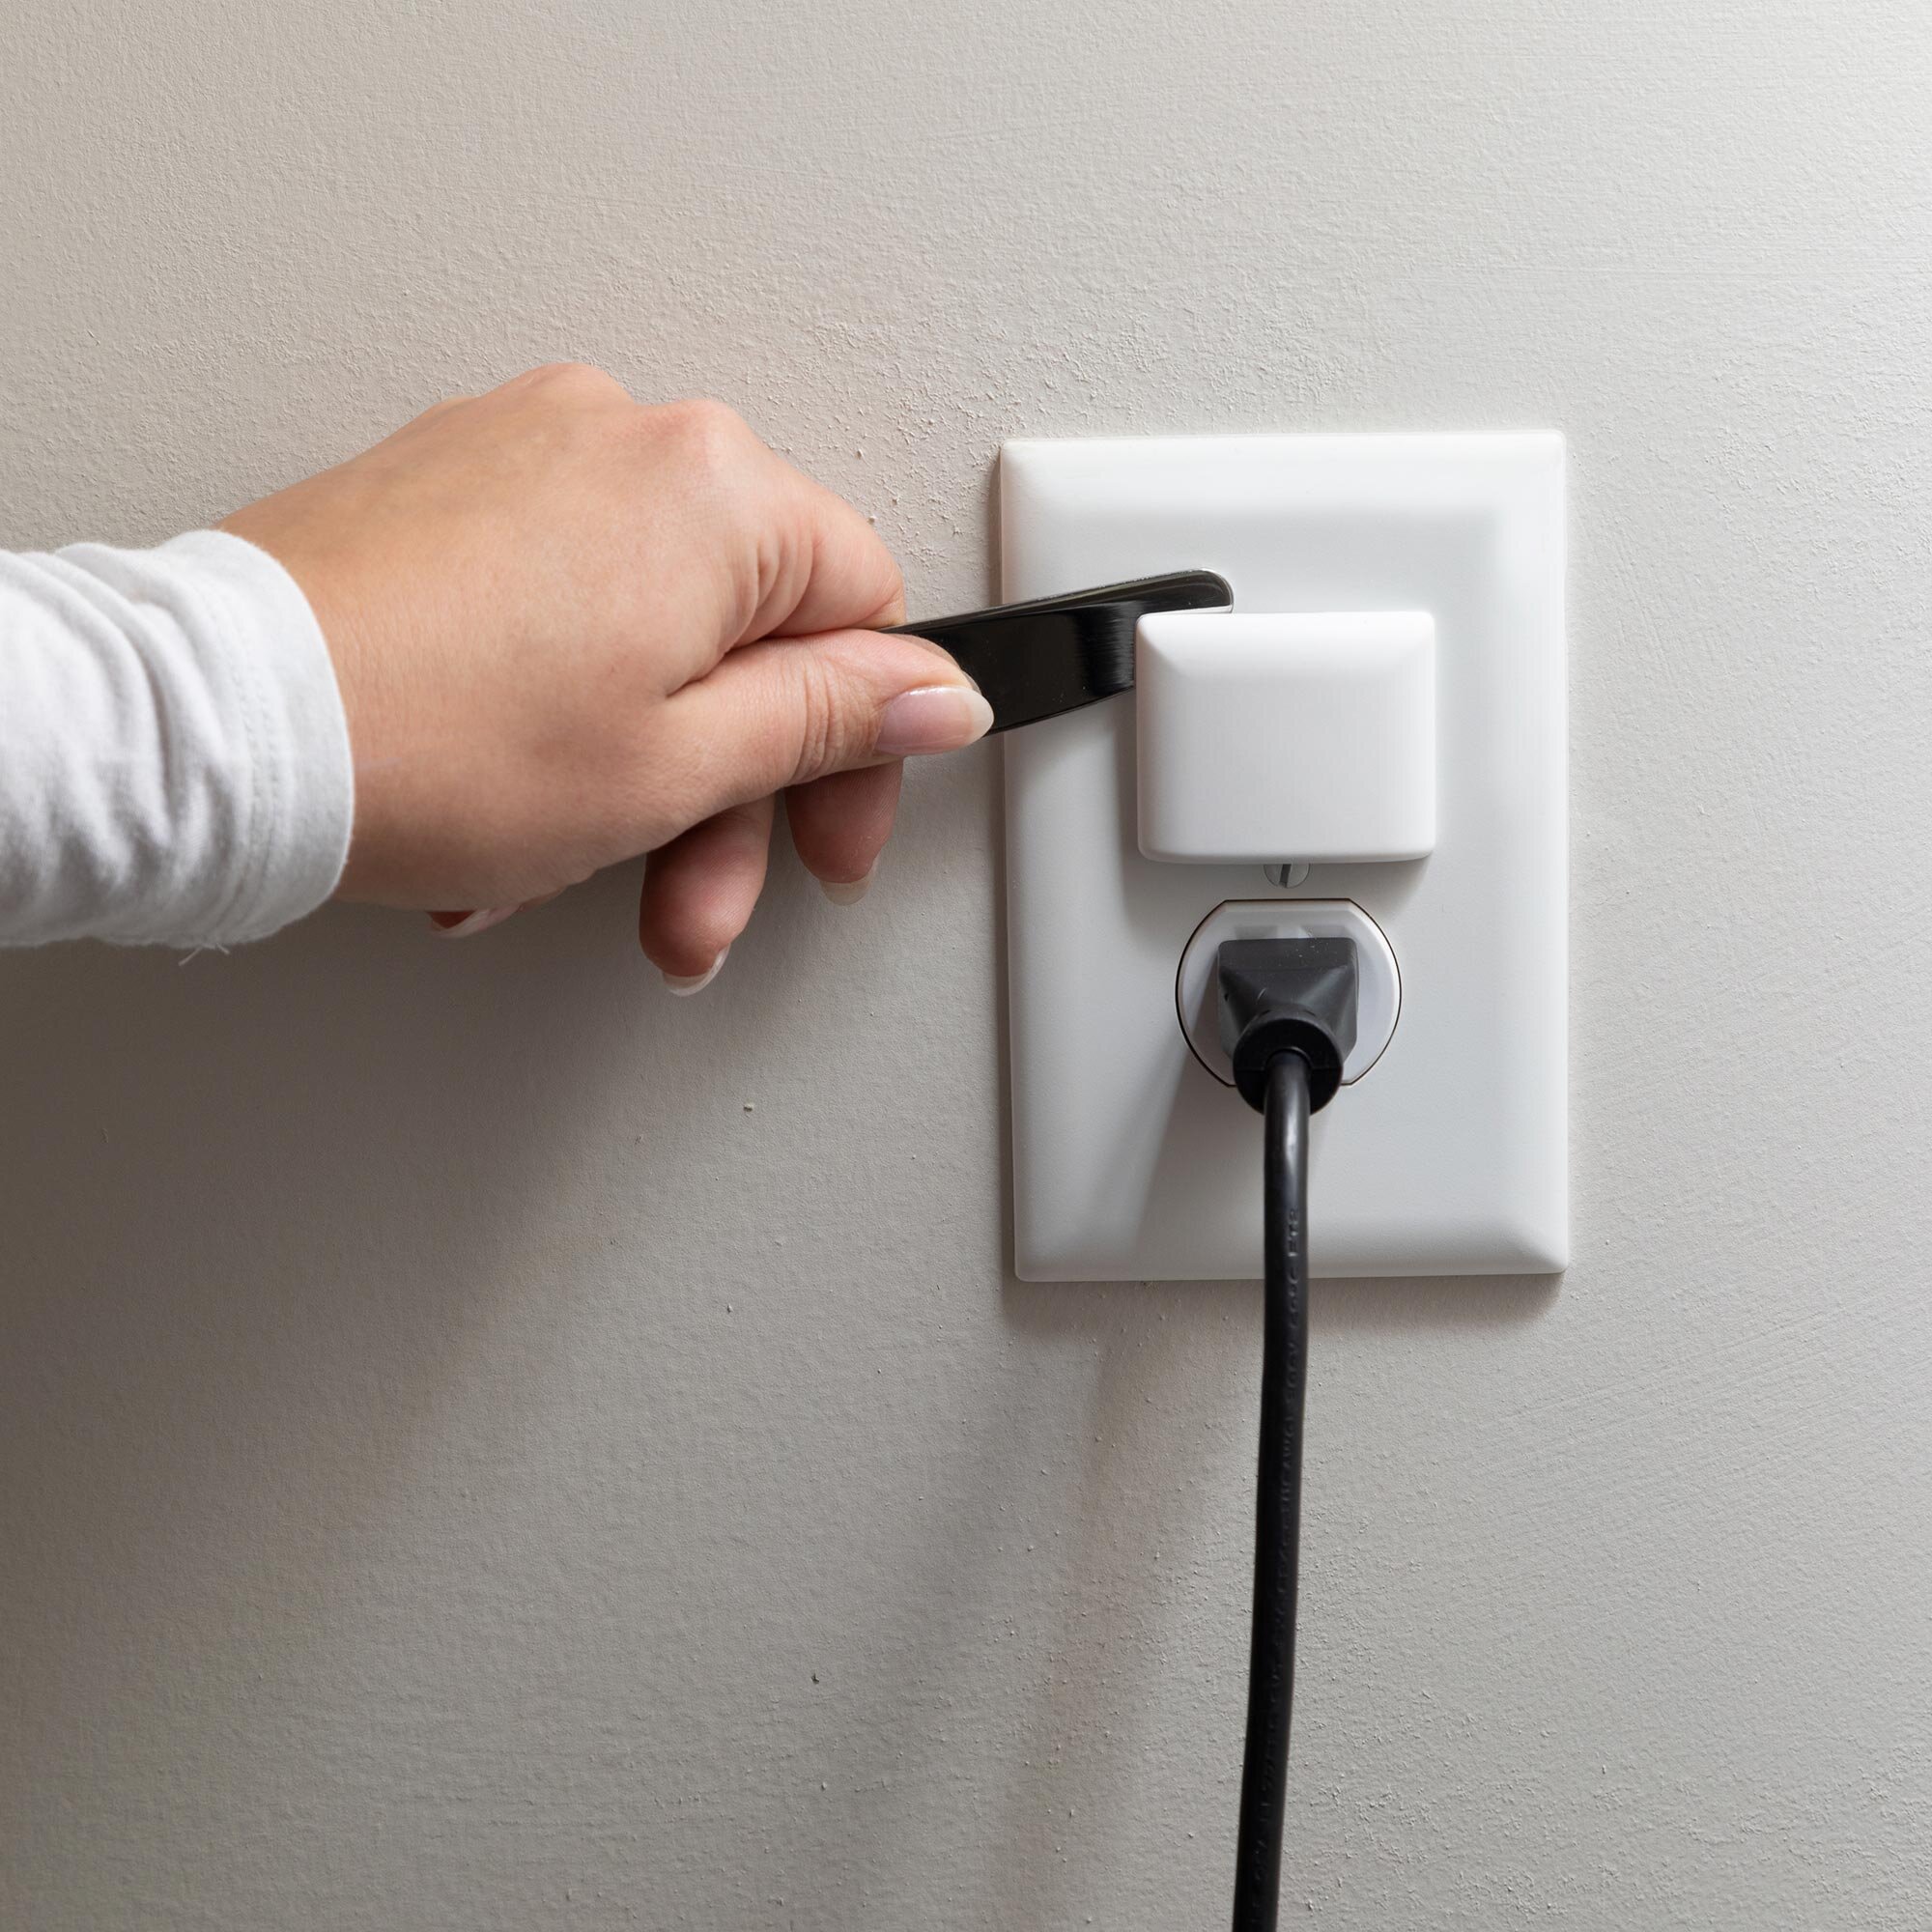 Removing StayPut® Single Outlet Plug